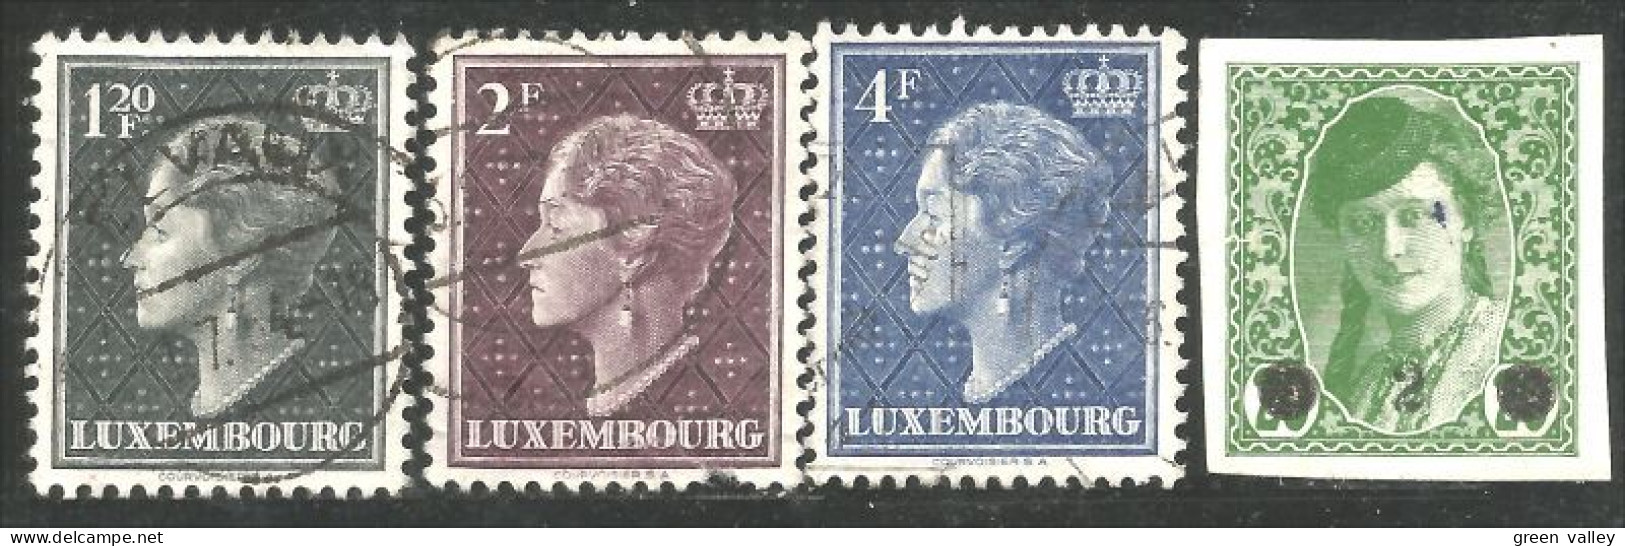 584 Luxembourg 1948 Grande Duchesse Charlotte 1F 20 - 4F (LUX-123) - 1948-58 Charlotte Left-hand Side